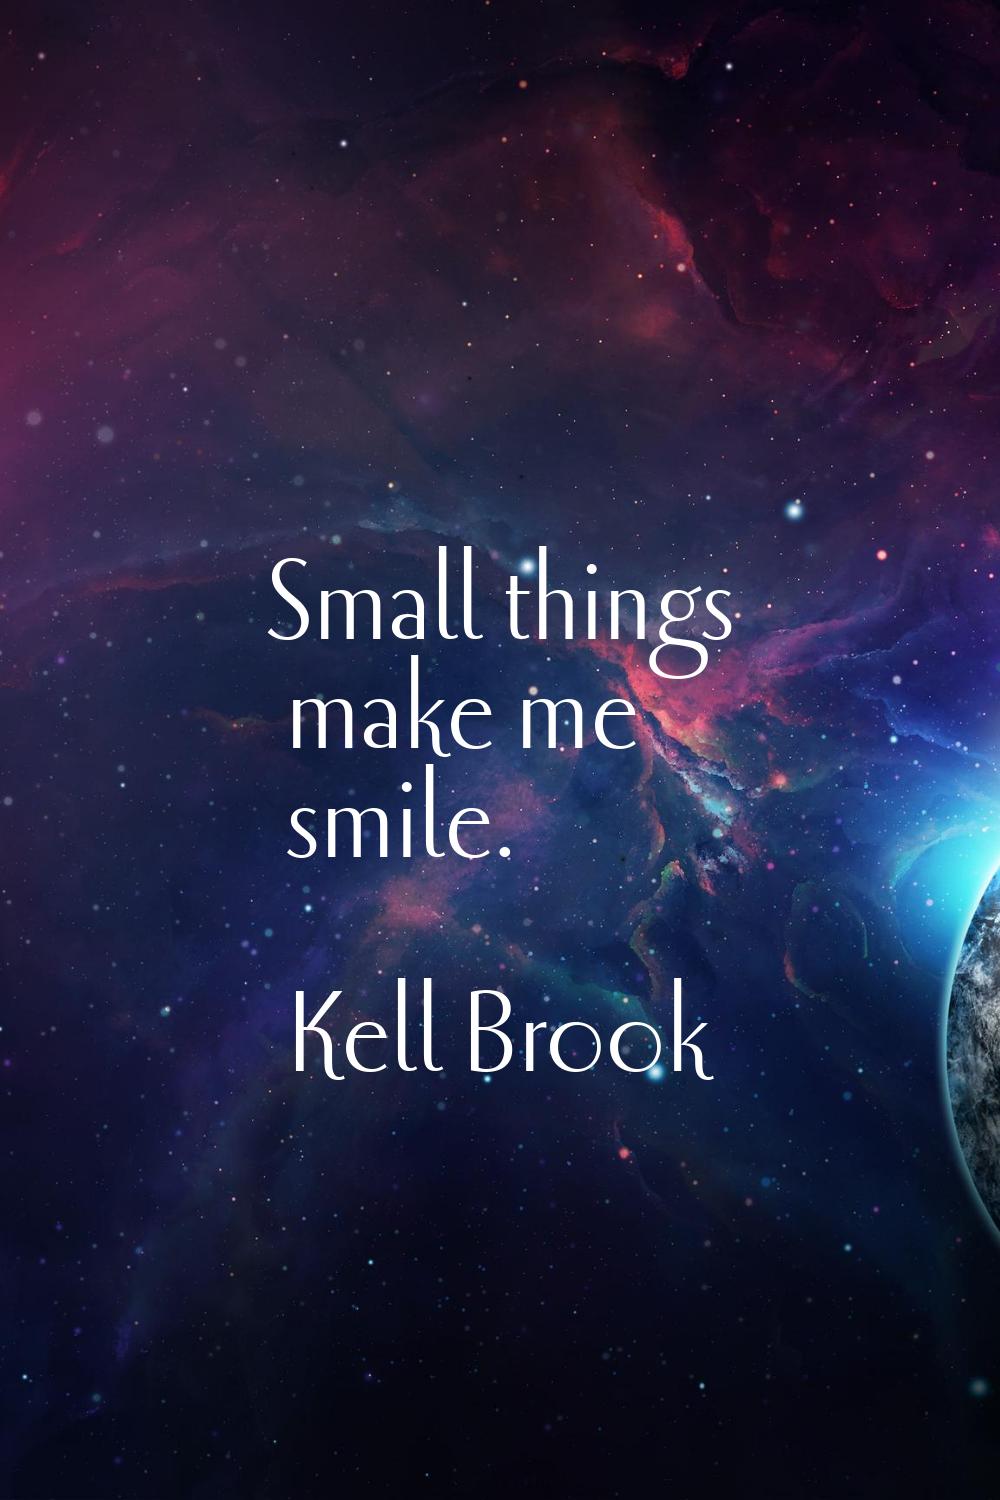 Small things make me smile.